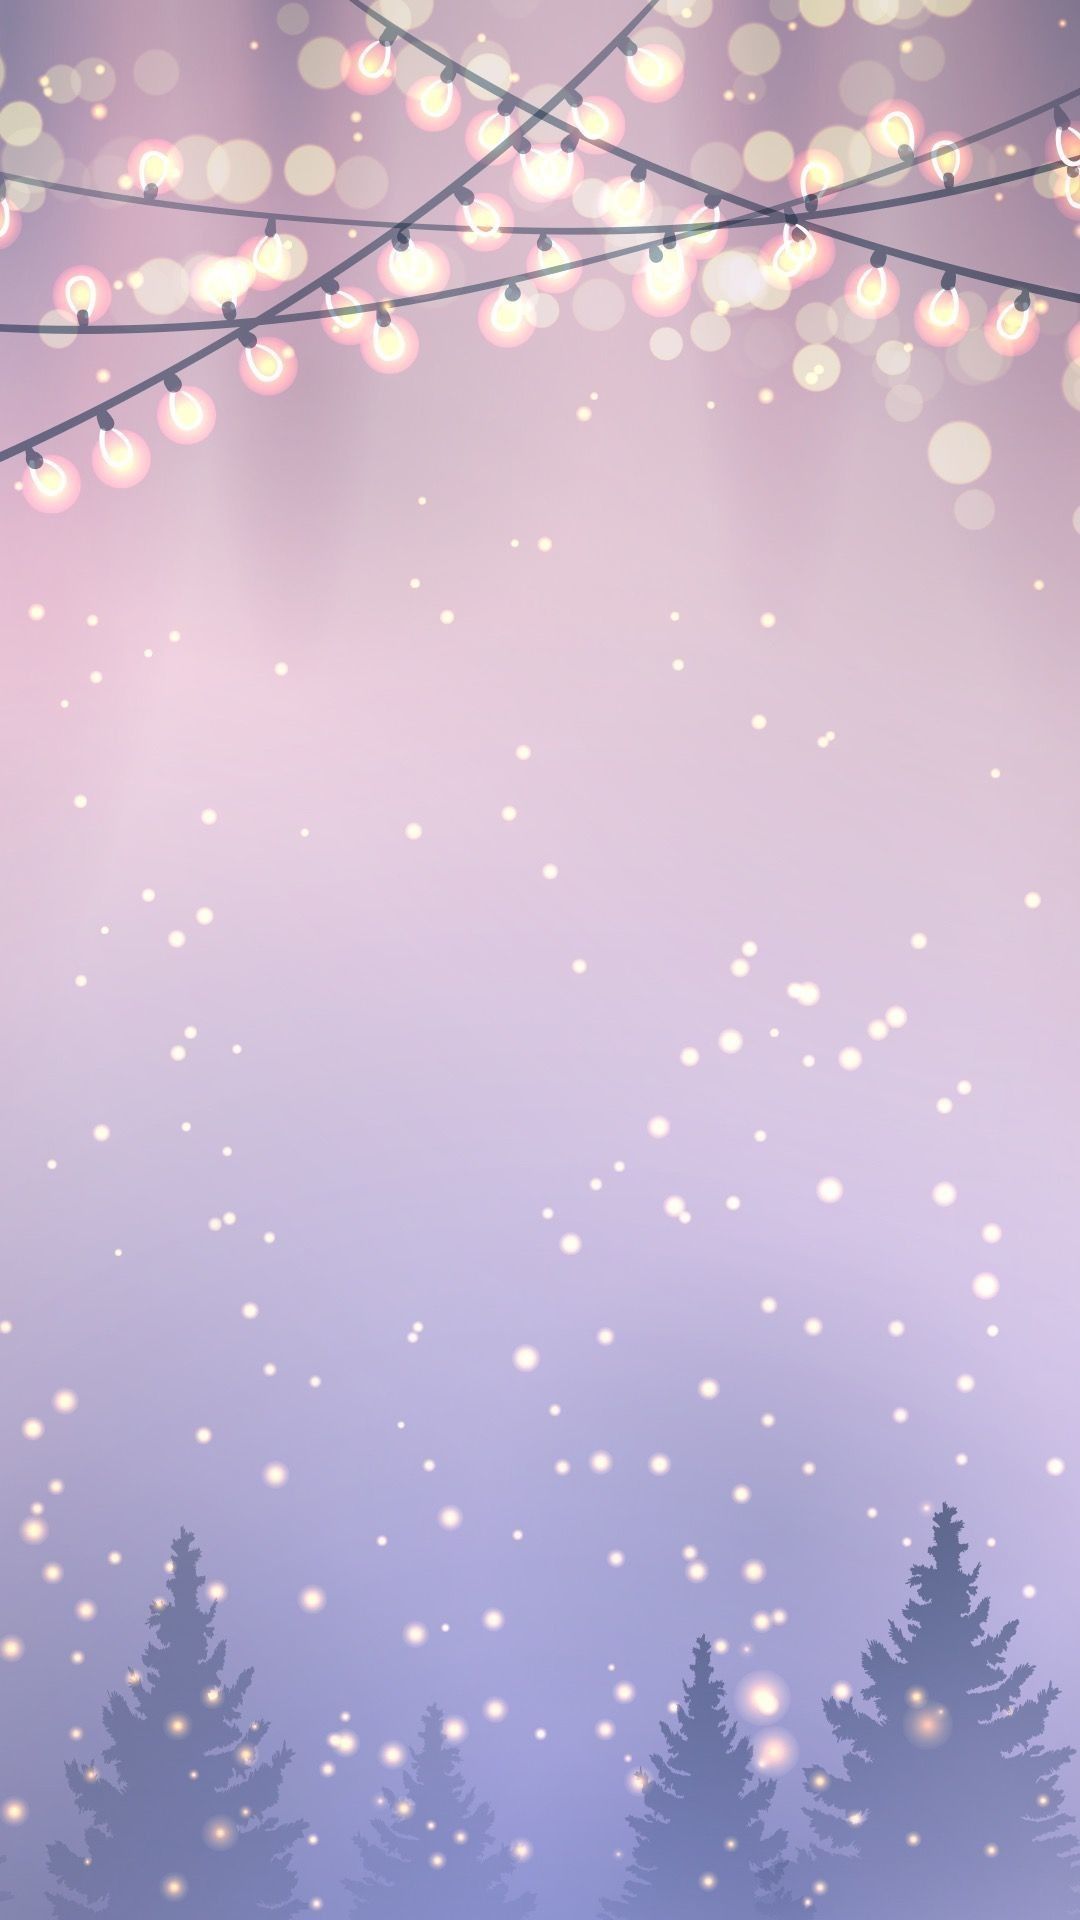 Cute Christmas Phone. Winter wallpaper, Pretty wallpaper, Christmas phone wallpaper